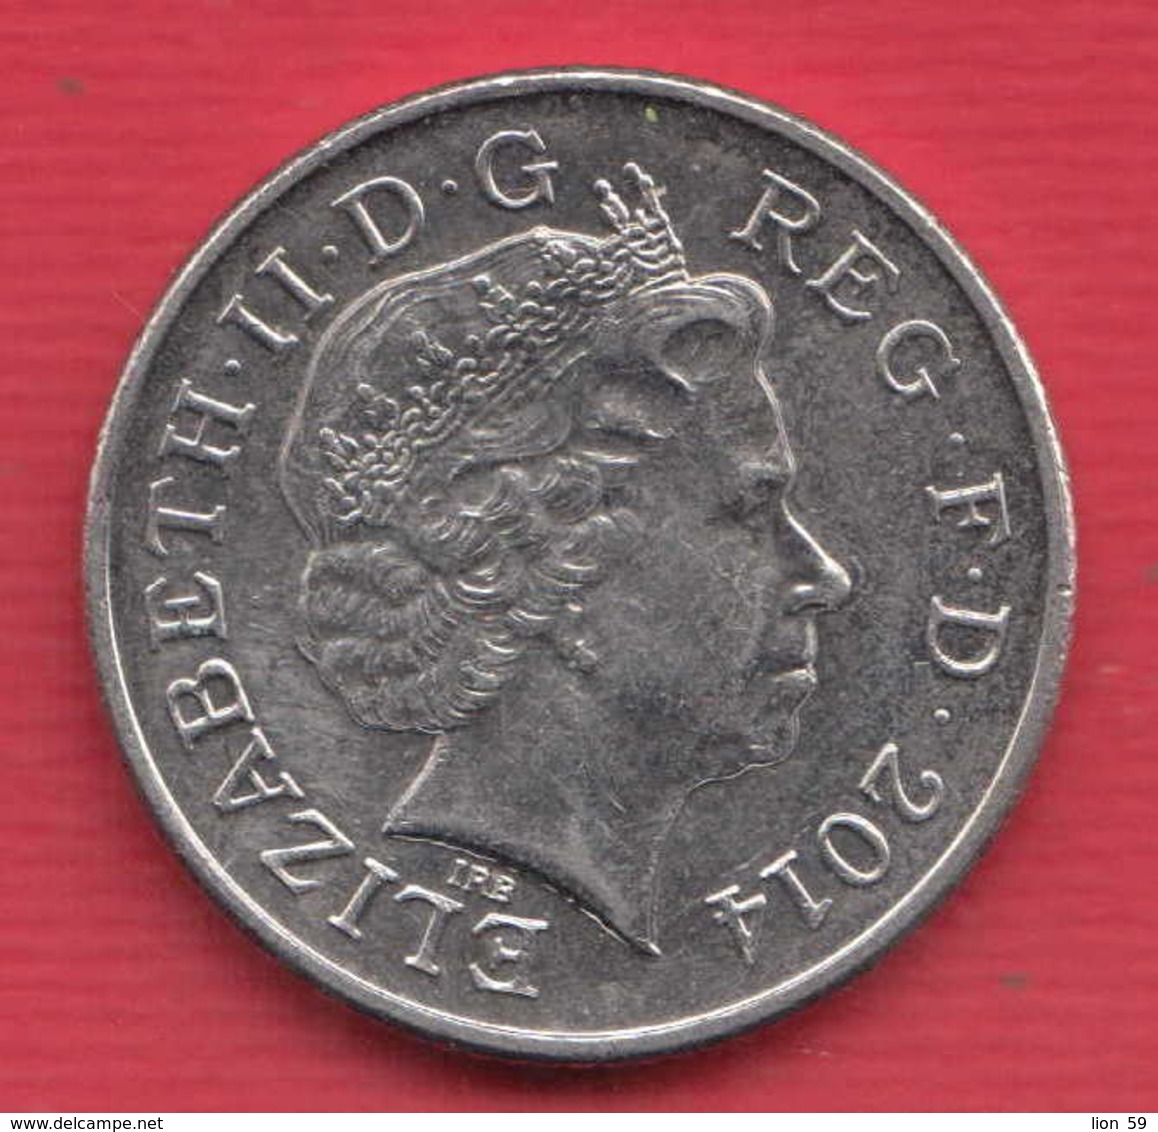 F7788 / 2014 - 10 TEN PENCE , Elizabeth II D.G. , Great Britain Grande-Bretagne , Coins Munzen Monnaies Monete - 10 Pence & 10 New Pence